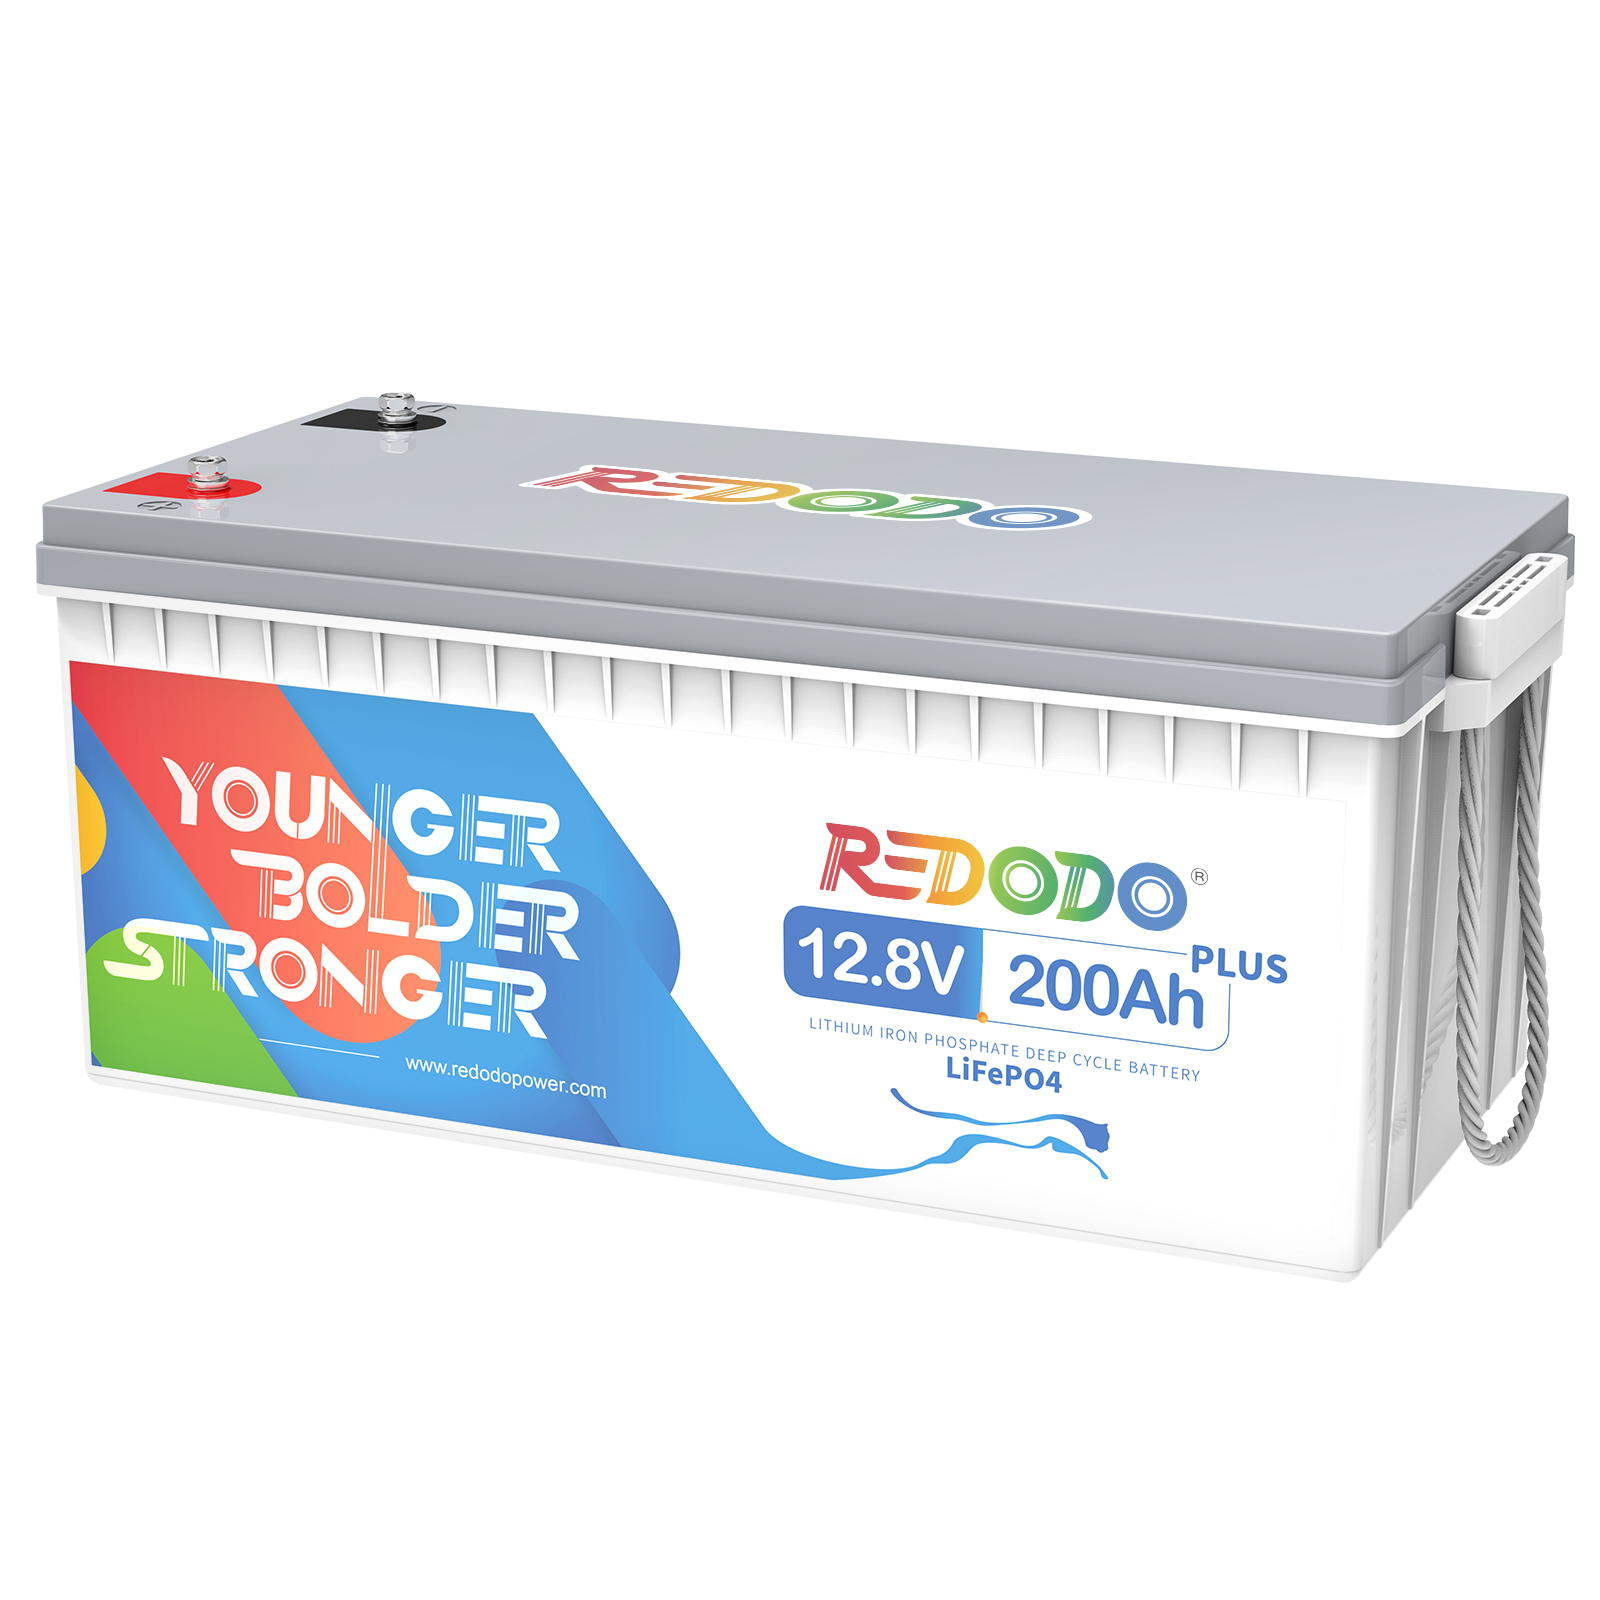 Redodo 12V 200Ah Plus LiFePO4 Battery | 2.56kWh & 2.56kW Redodo